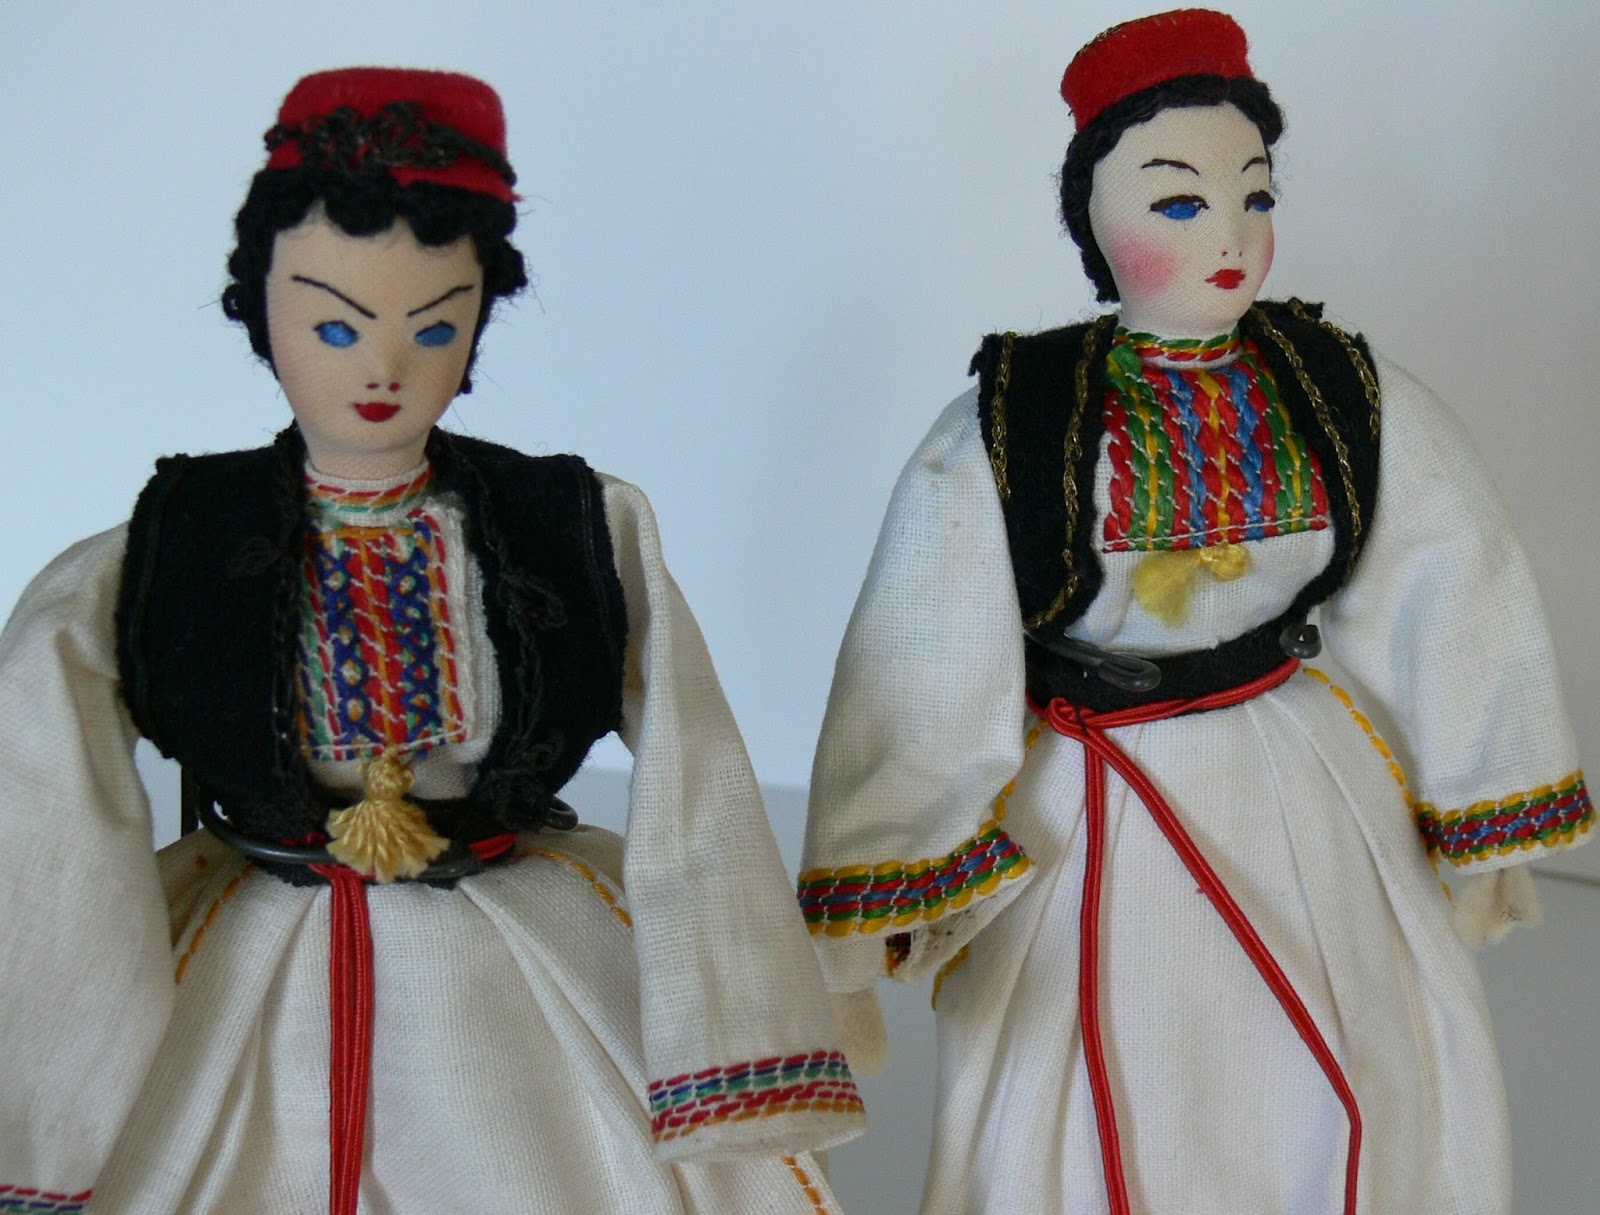 Croatian dolls